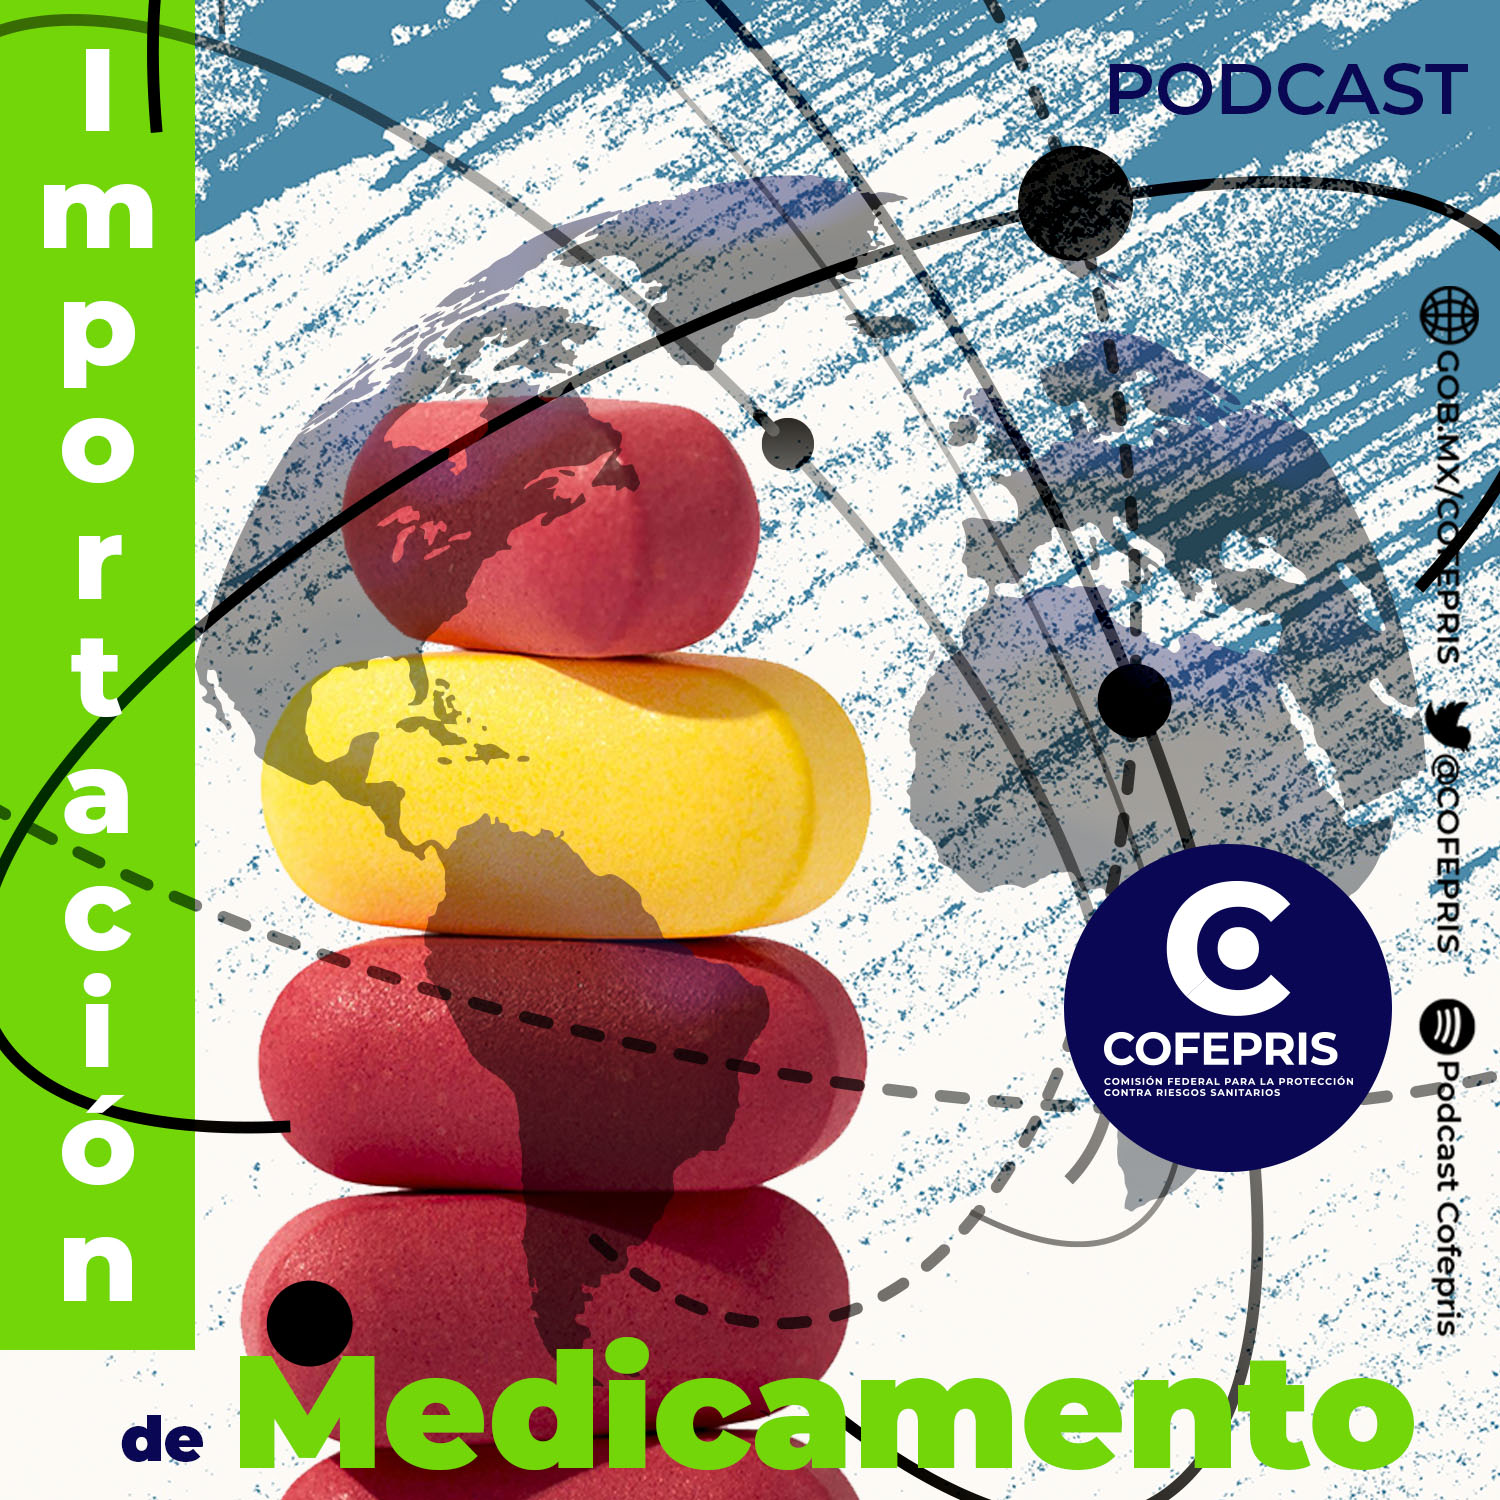 /cms/uploads/image/file/750530/Importacio_n_de_medicamentos.jpg